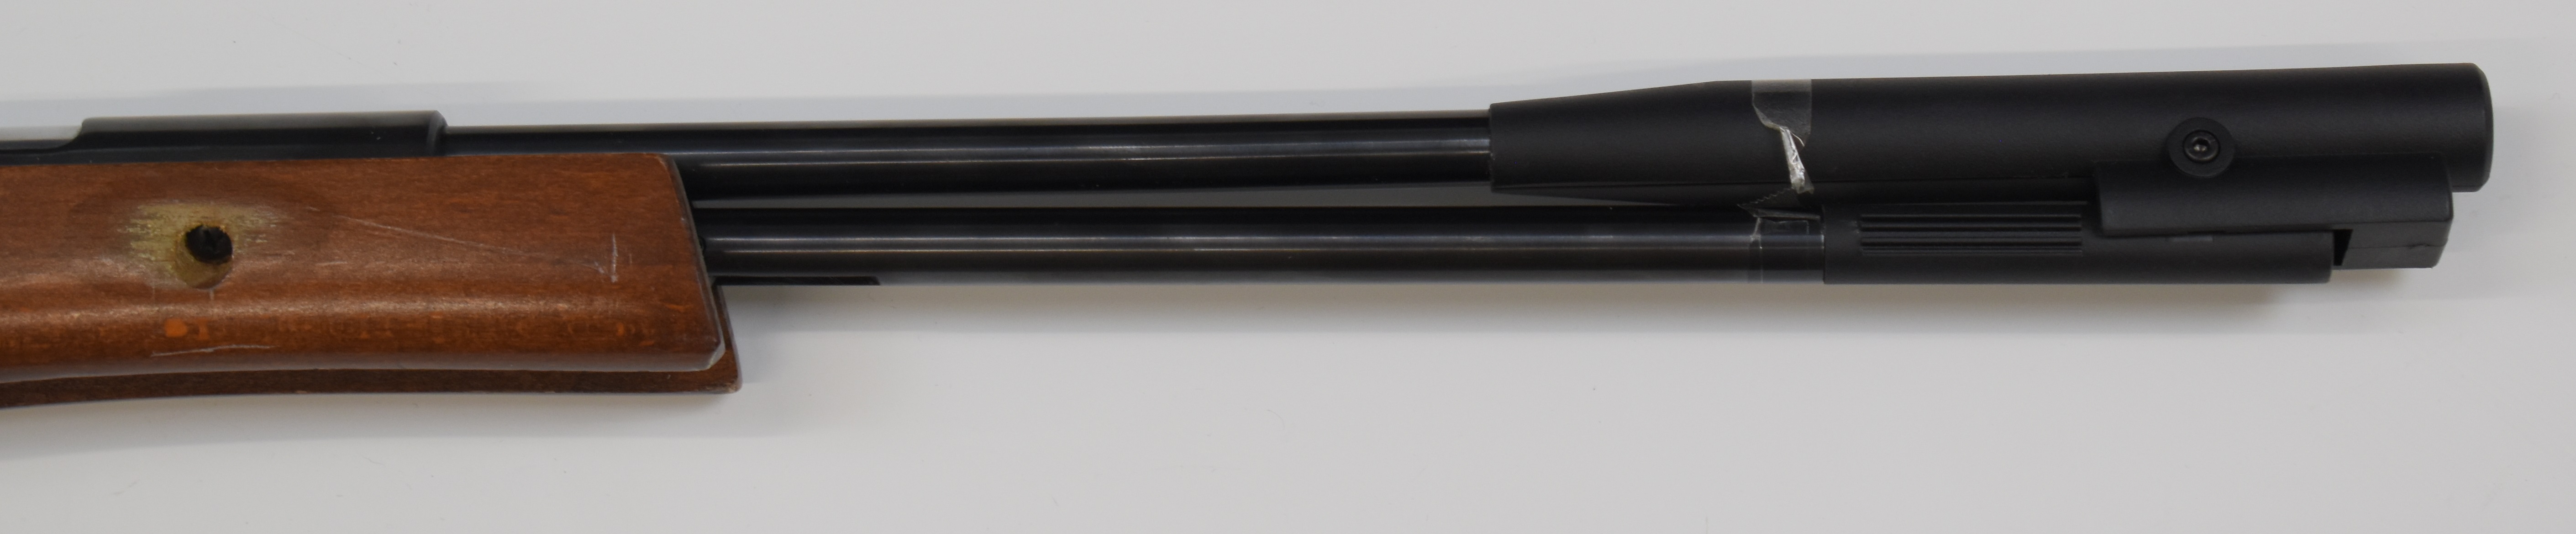 Remington Warhawk .177 under-lever air rifle with textured semi-pistol grip, raised cheek piece - Image 5 of 11